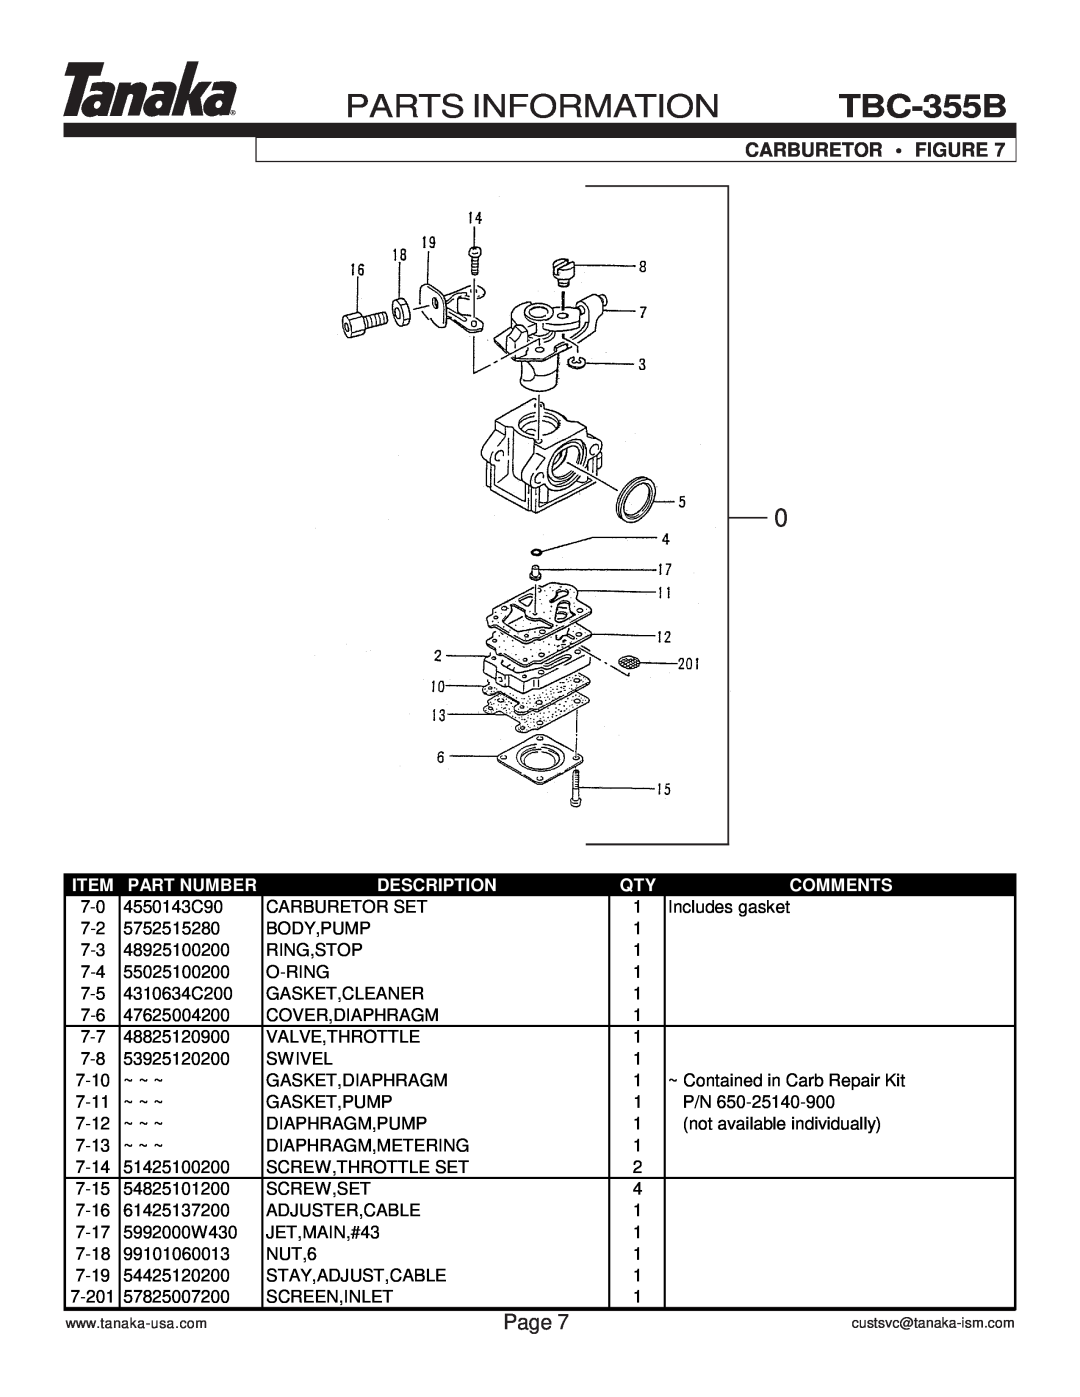 Tanaka TBC-355B manual Carburetor • Figure, Parts Information, Page, Item, Part Number, Description, Comments 